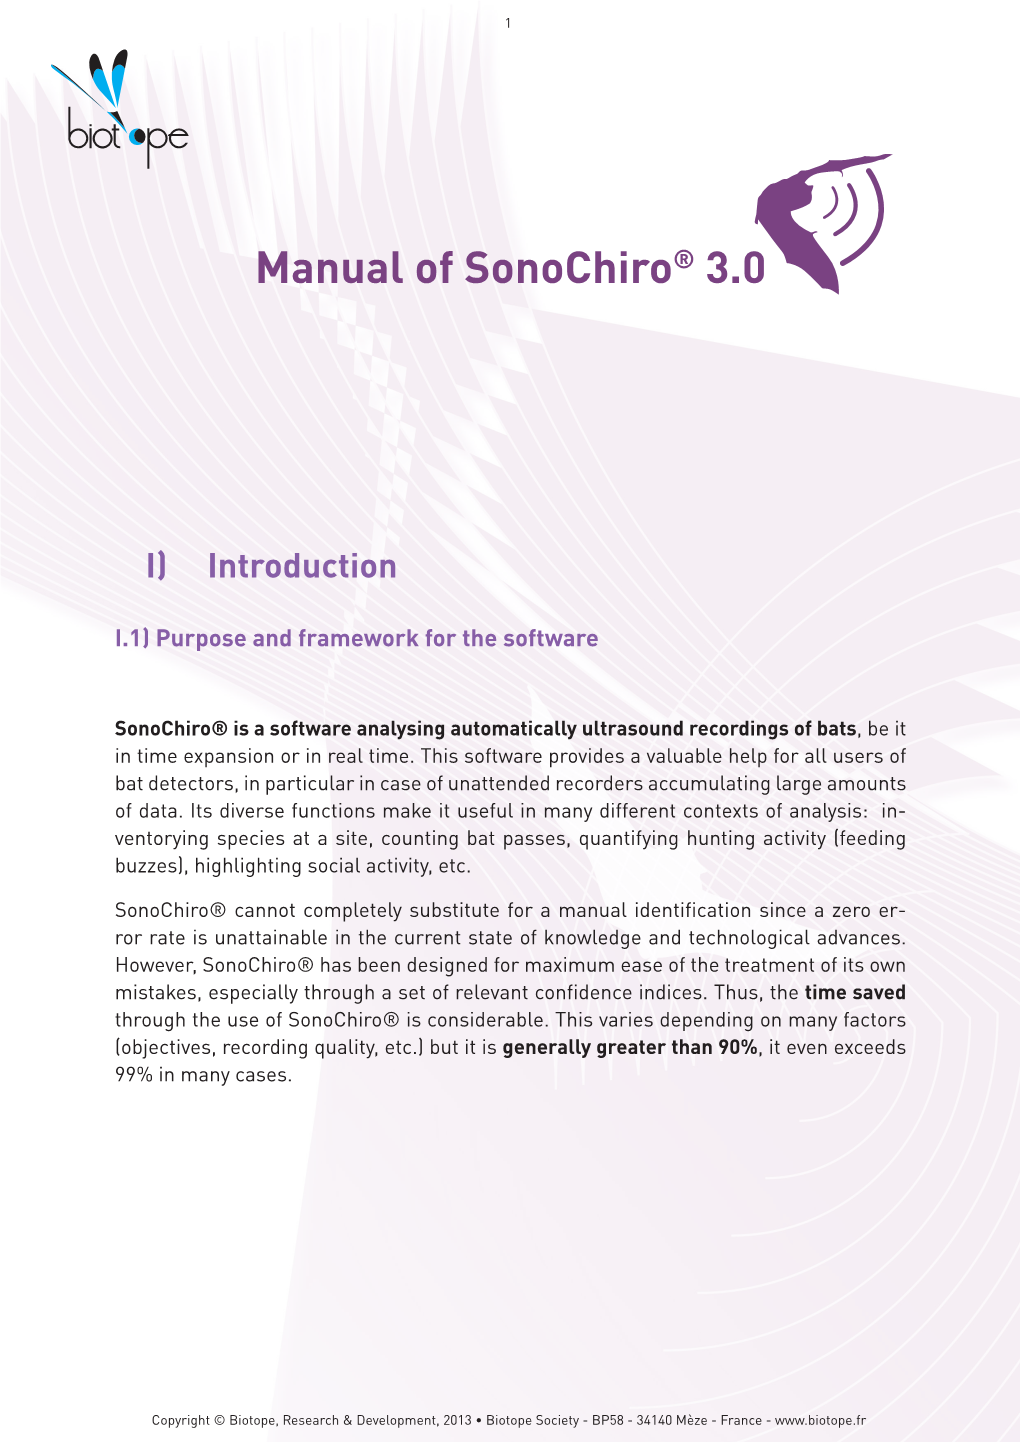 Manual of Sonochiro® 3.0